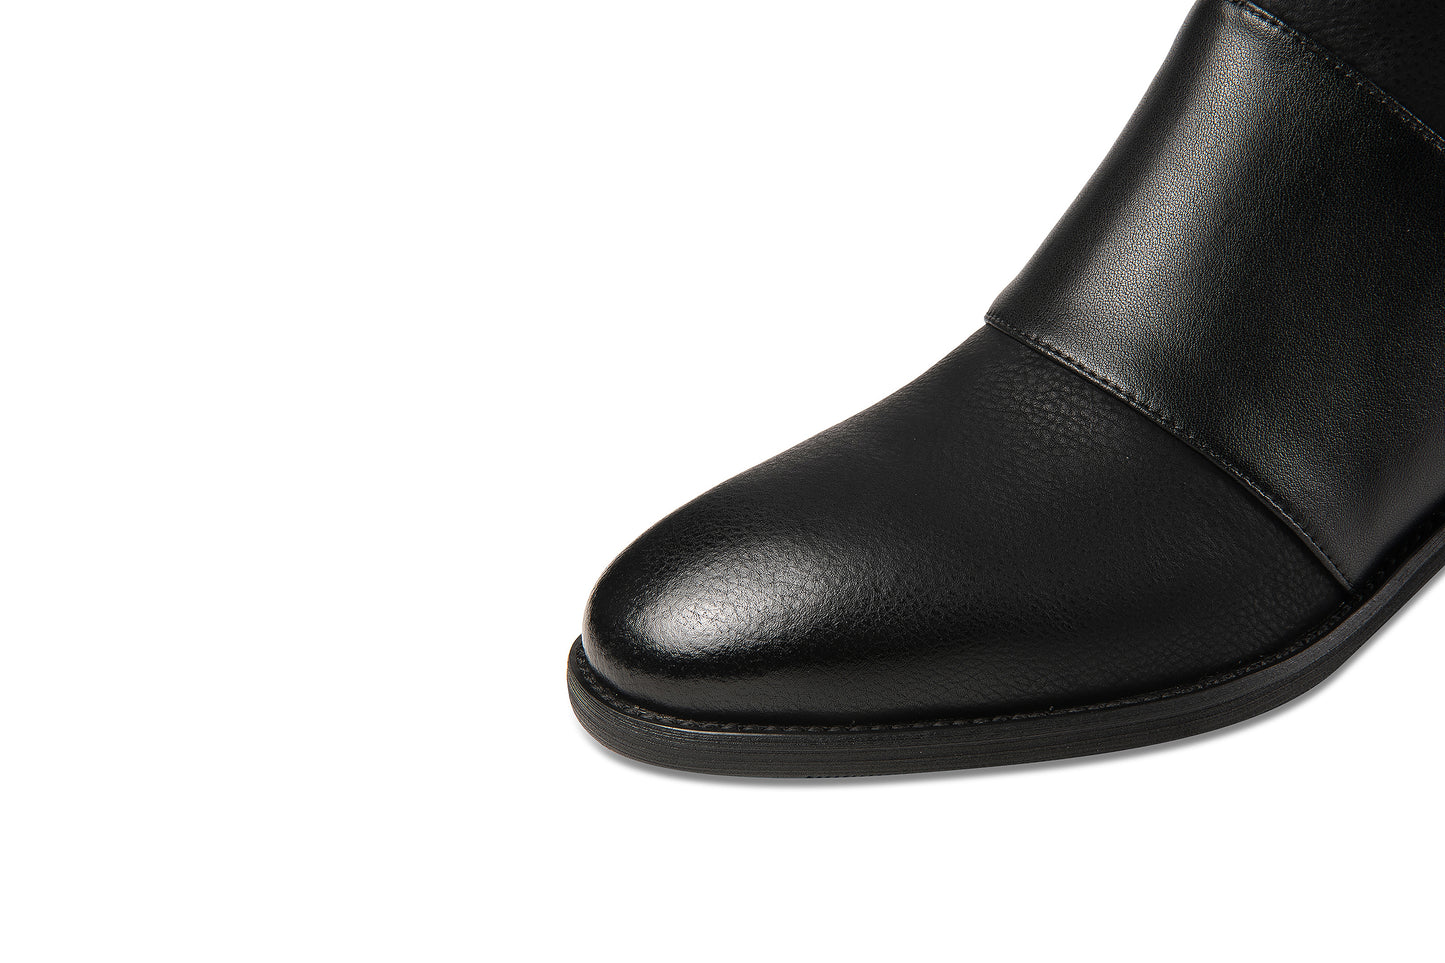 TinaCus Women's Handmade Genuine Leather Block Heel Round Toe Side Zip Up Ankle Booties